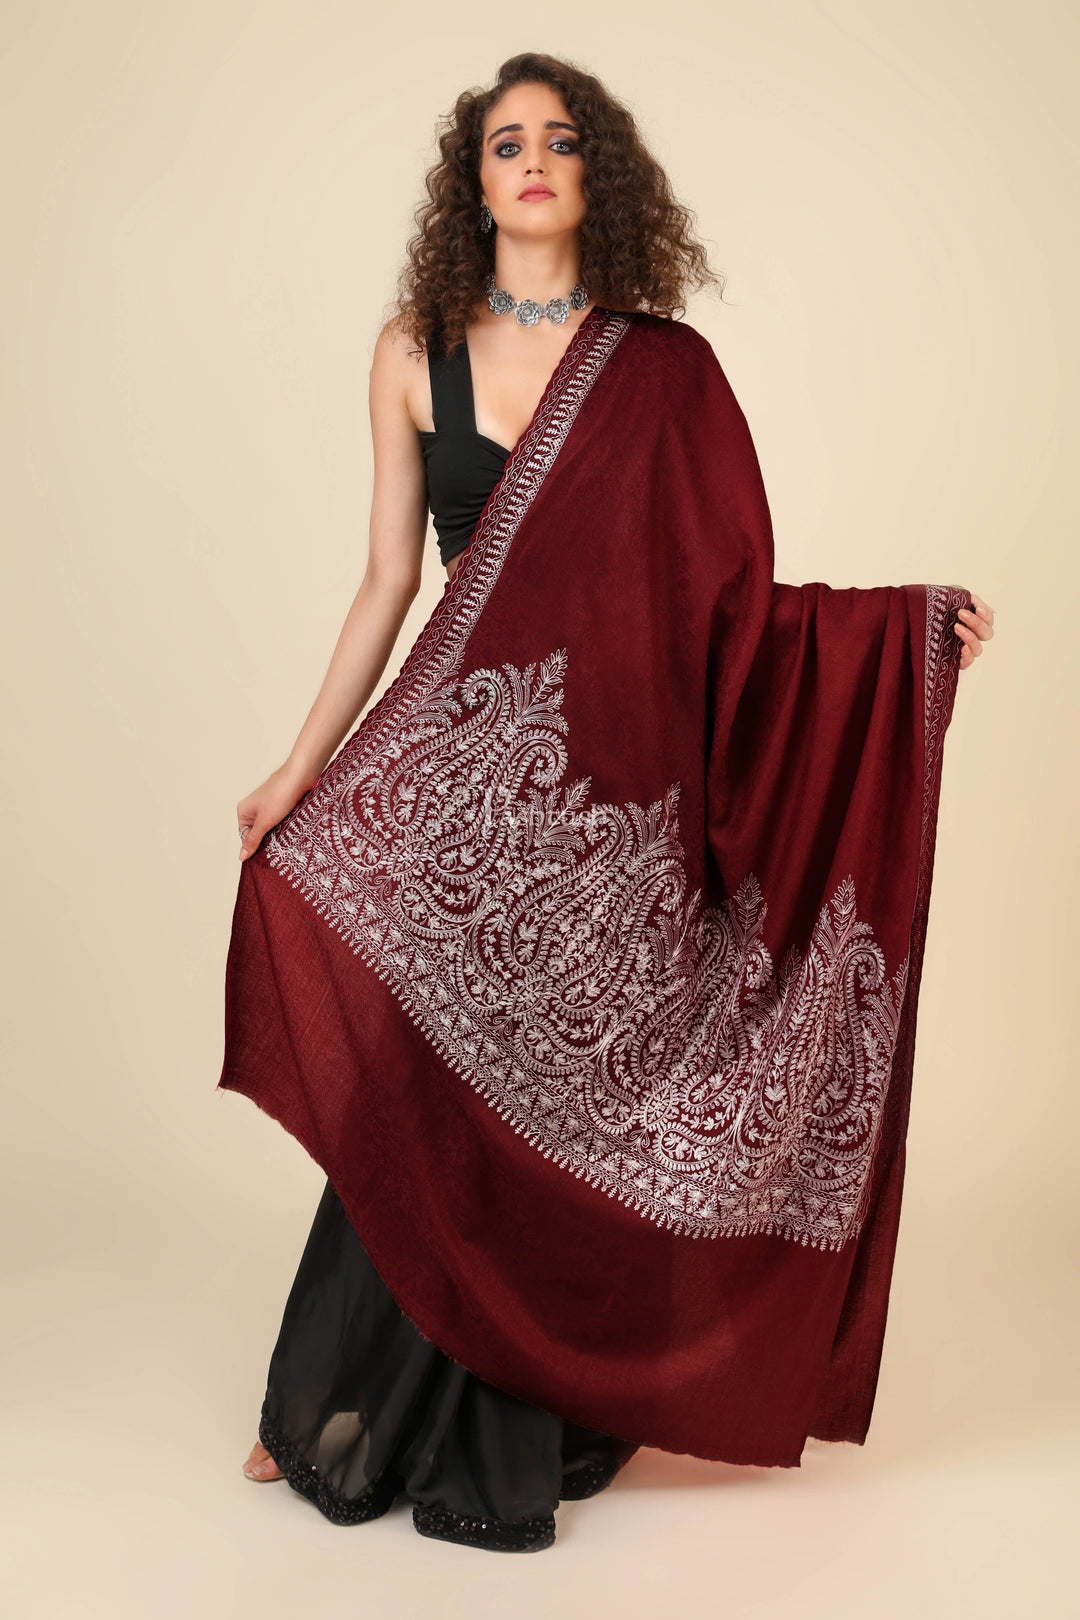 Pashtush India Womens Shawls Pashtush Womens Fine Wool Shawl, With Tone On Tone Nalki Embroidery, Soft And Warm, Maroon